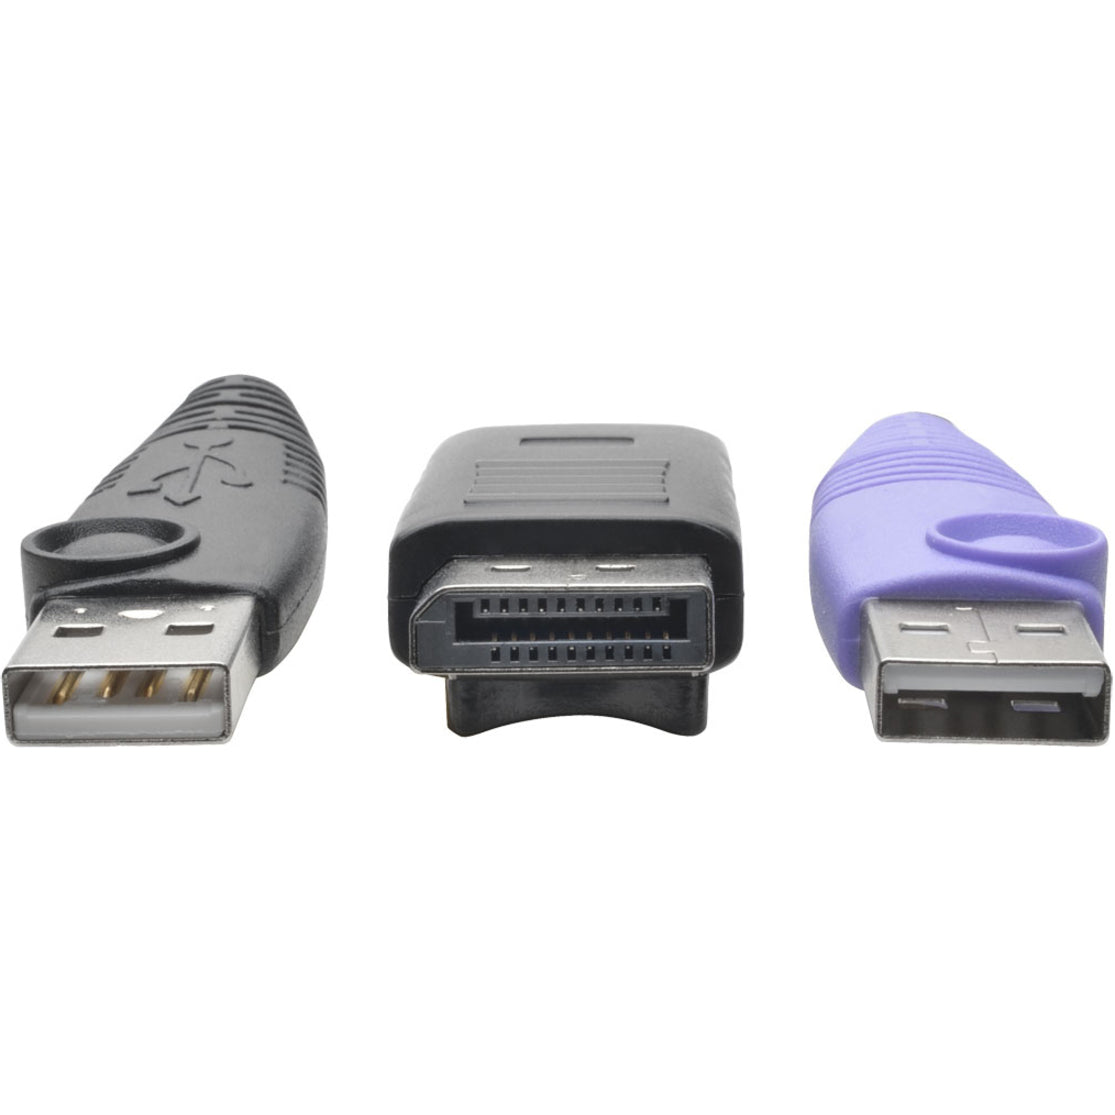 Tripp Lite B055-001-UDP NetDirector DisplayPort USB 服务器接口单元、KVM 控制台/扩展器、164.04 英尺最大工作距离、TAA 符合规定、台湾产地、3 年有限保修。品牌名称：Tripp Lite。品牌名称翻译：特力品。